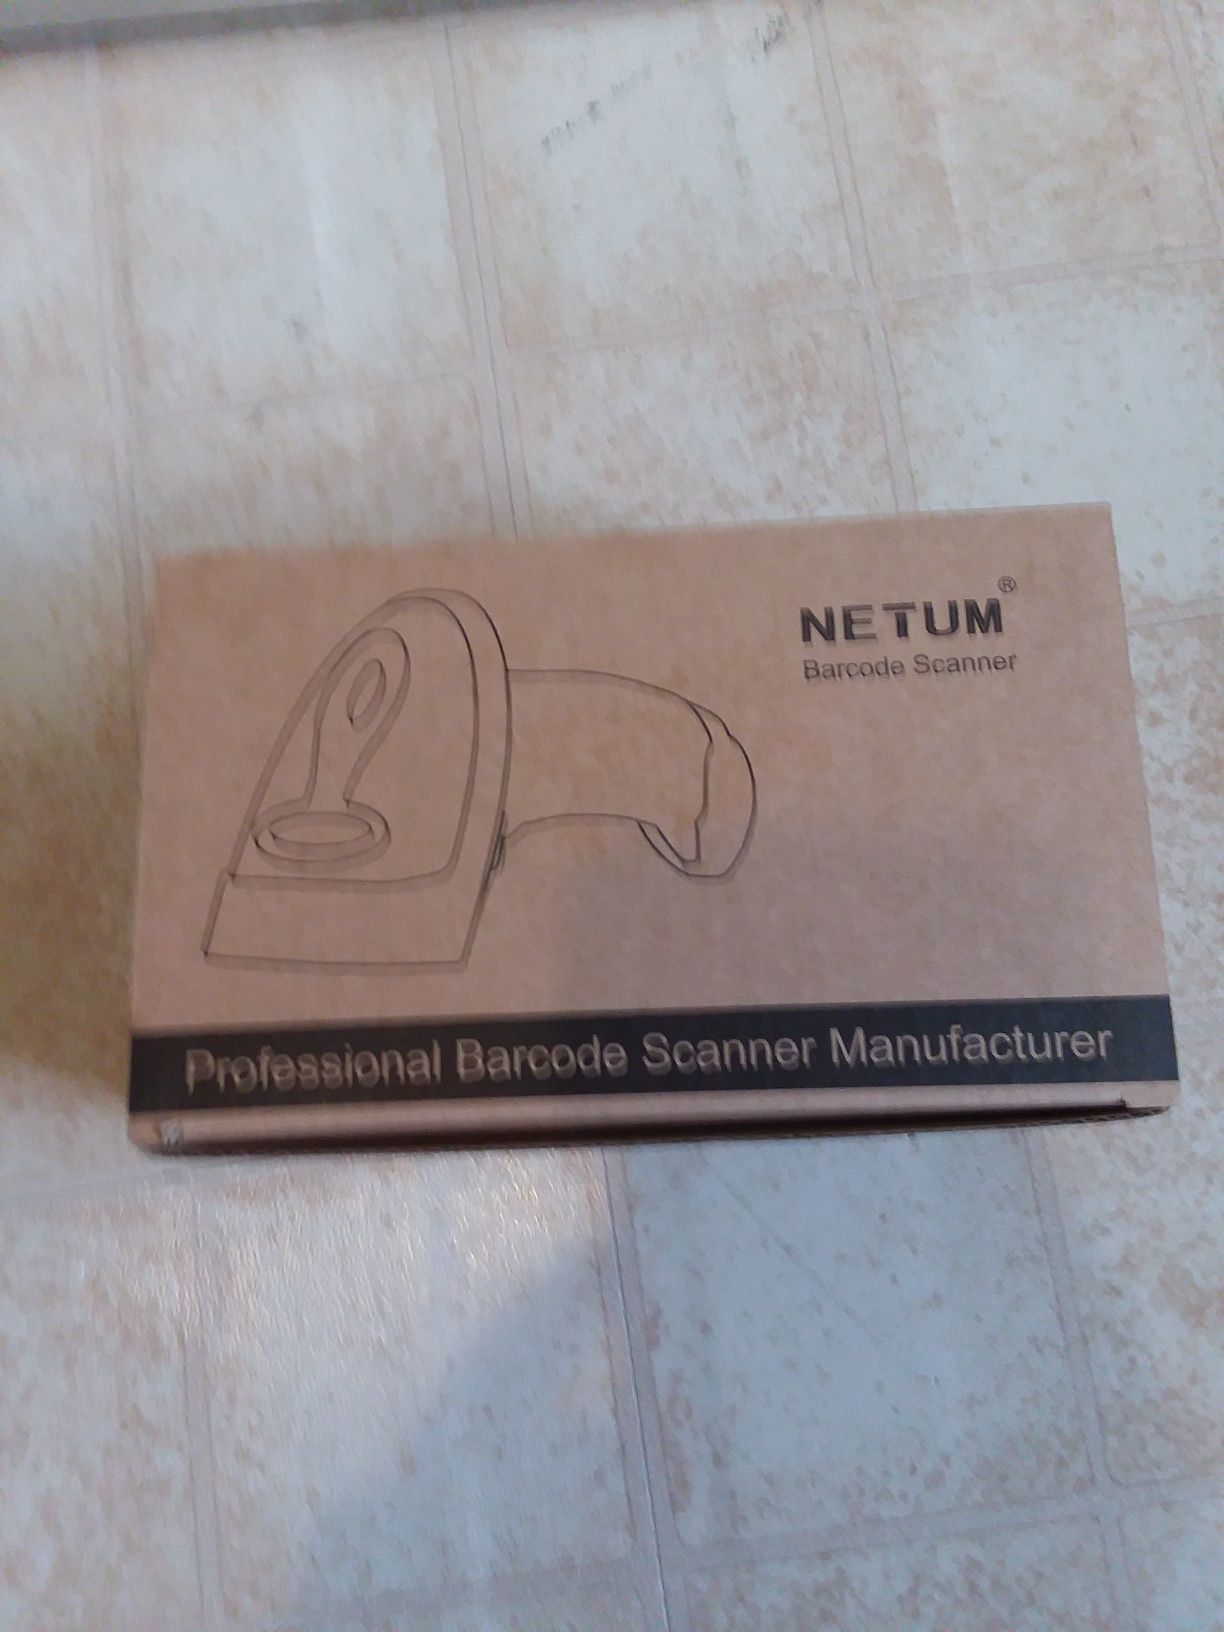 NETUM Bluetooth Scanner Professional Barcode Scanner Manufacturer.